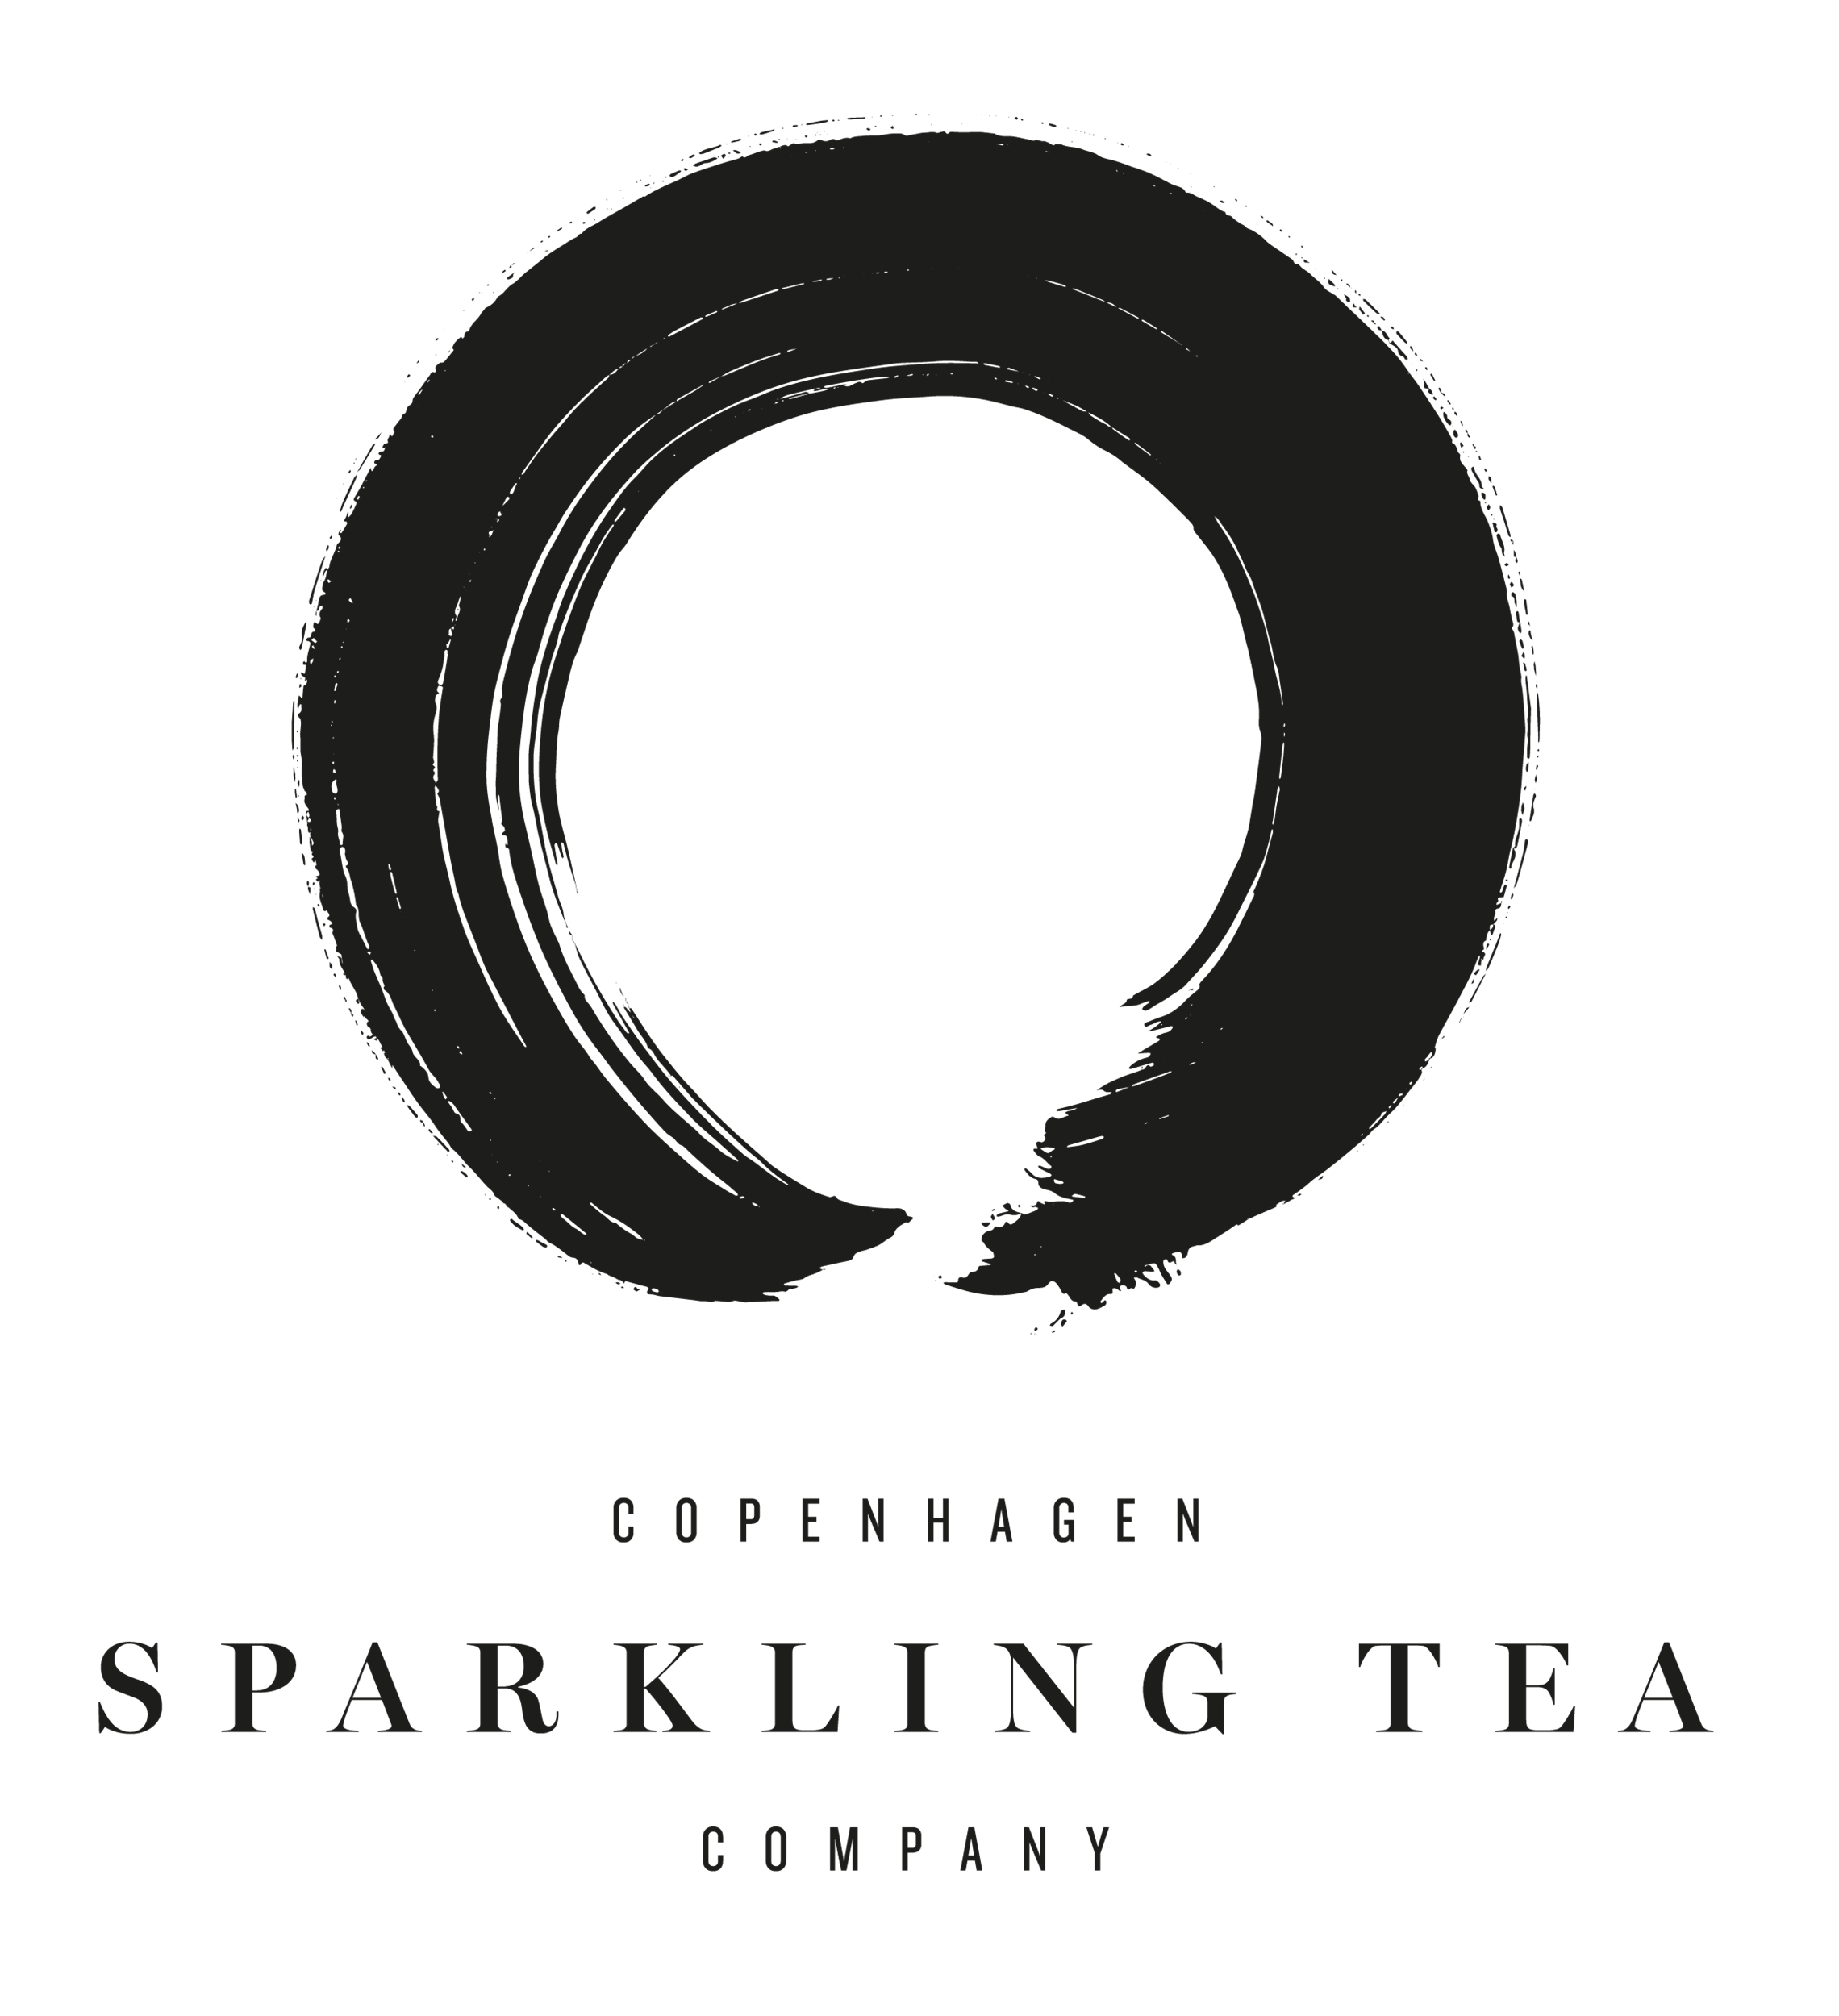 Copenhagen Sparkling Tea